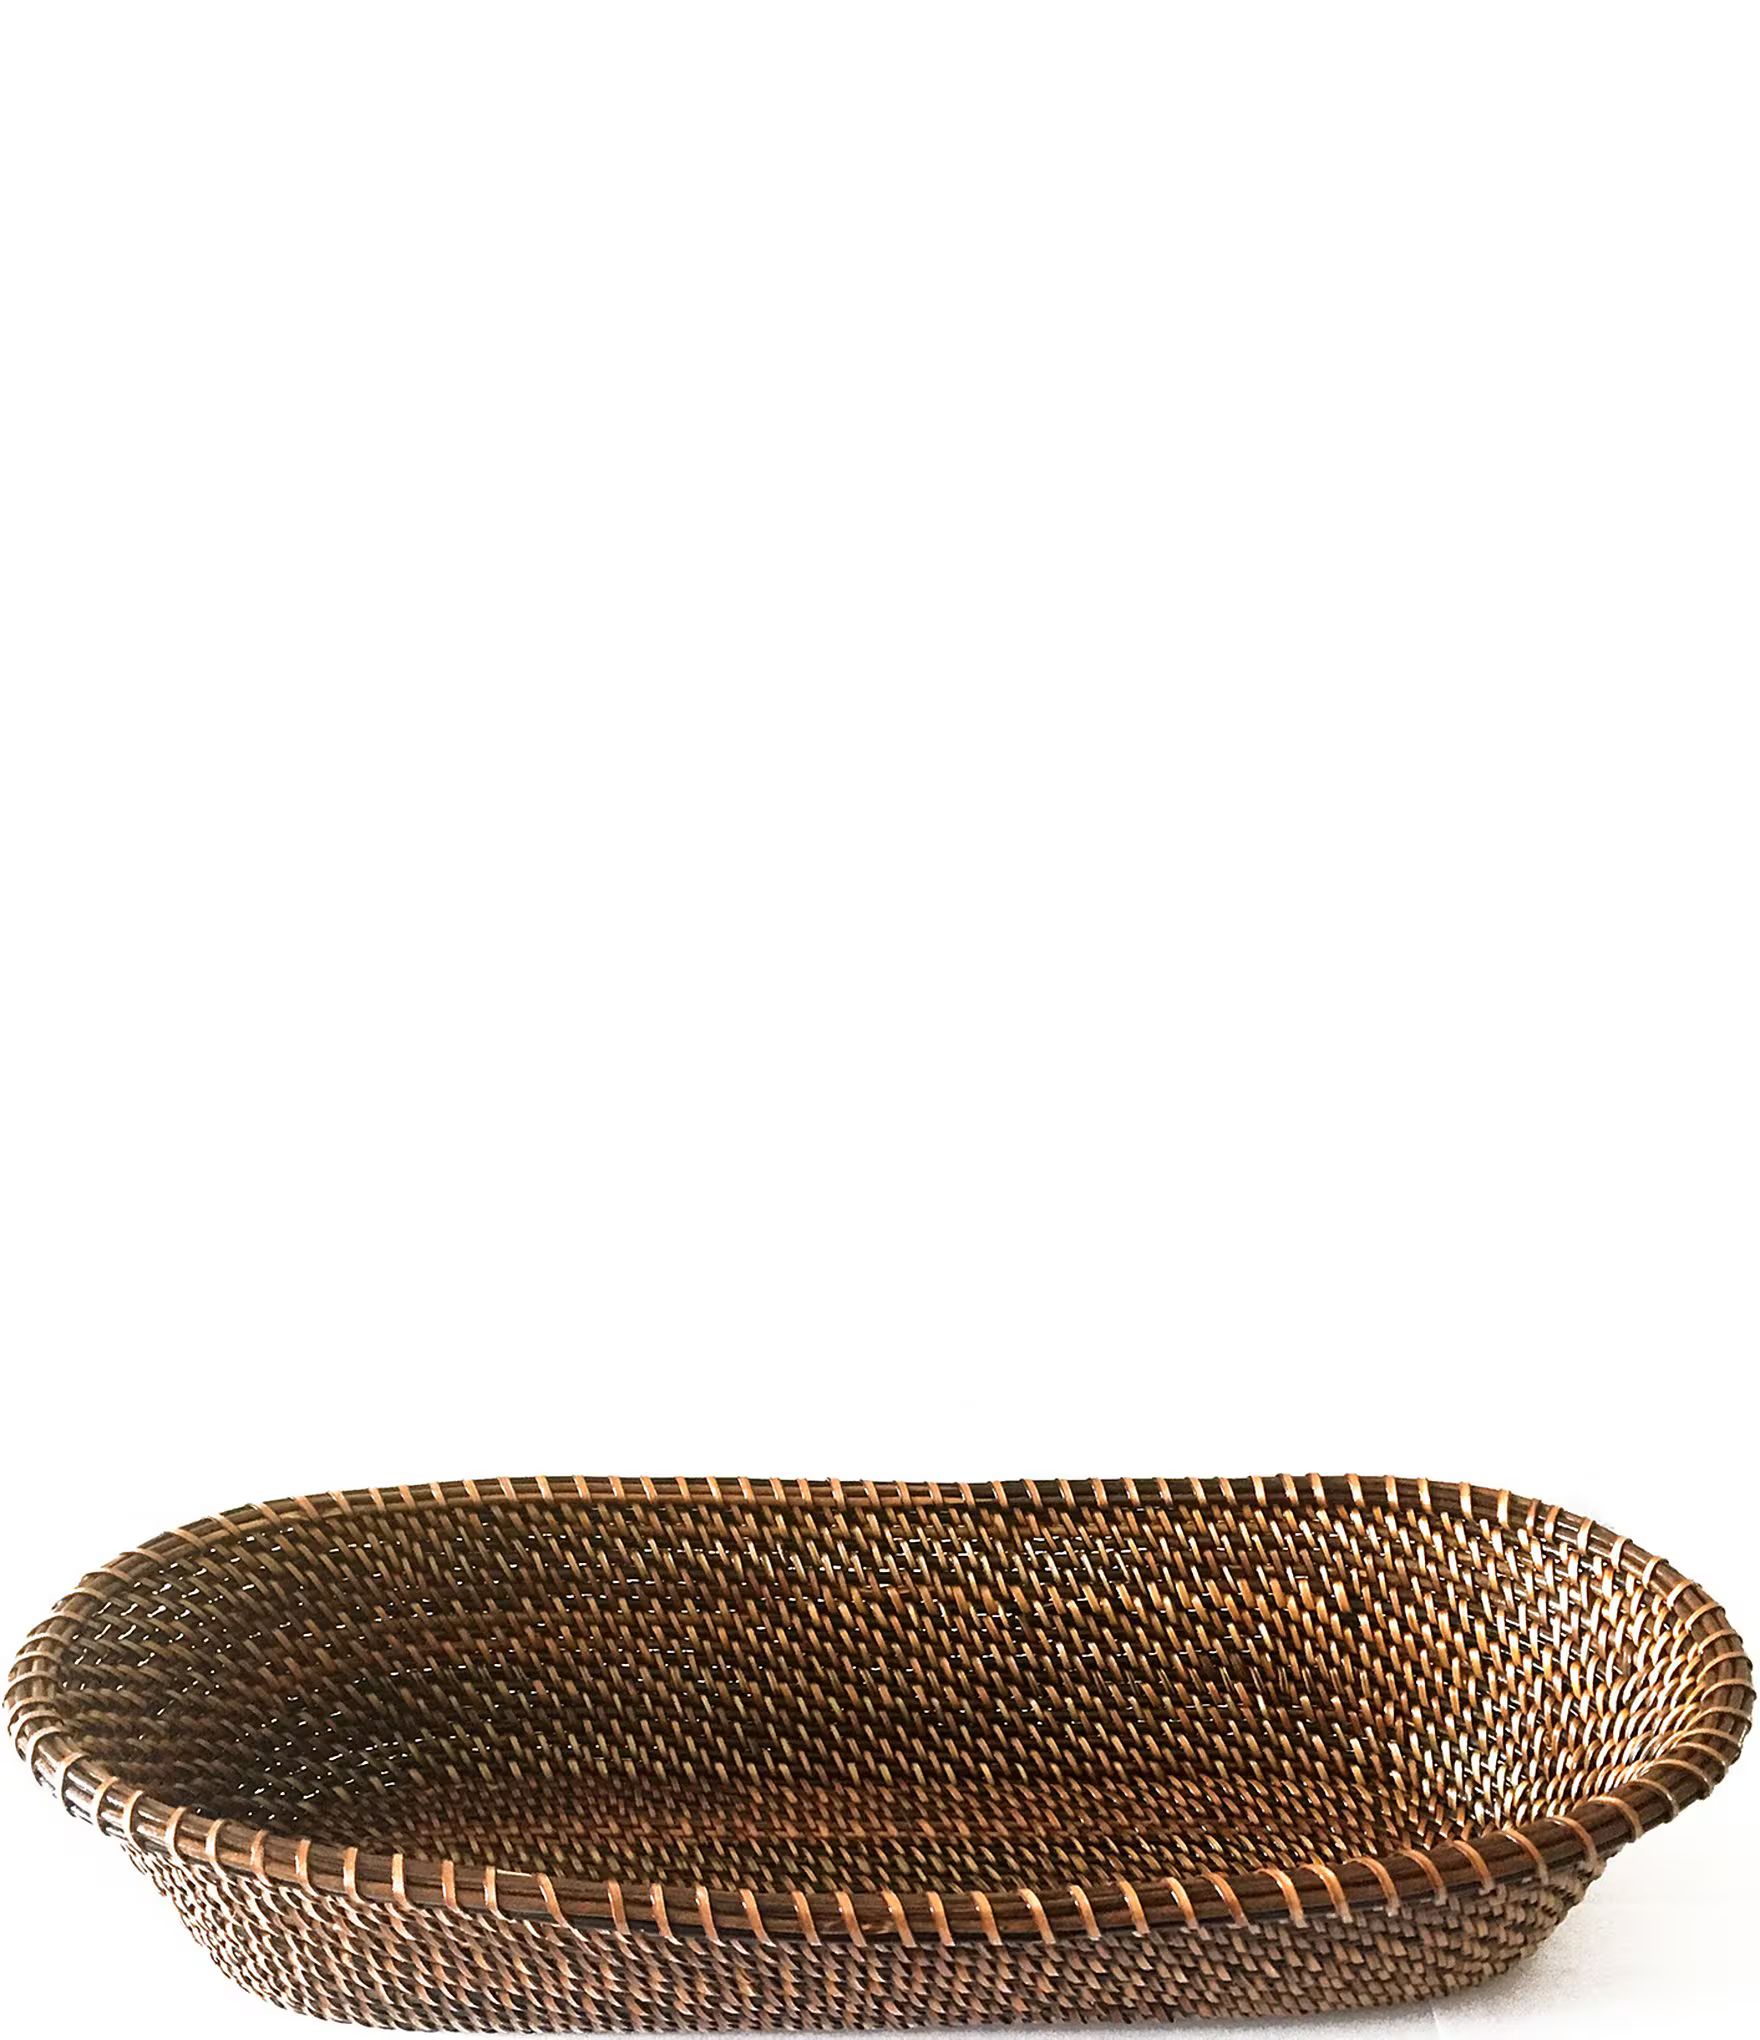 Festive Fall Nito Woven Oval Bread Basket | Dillards